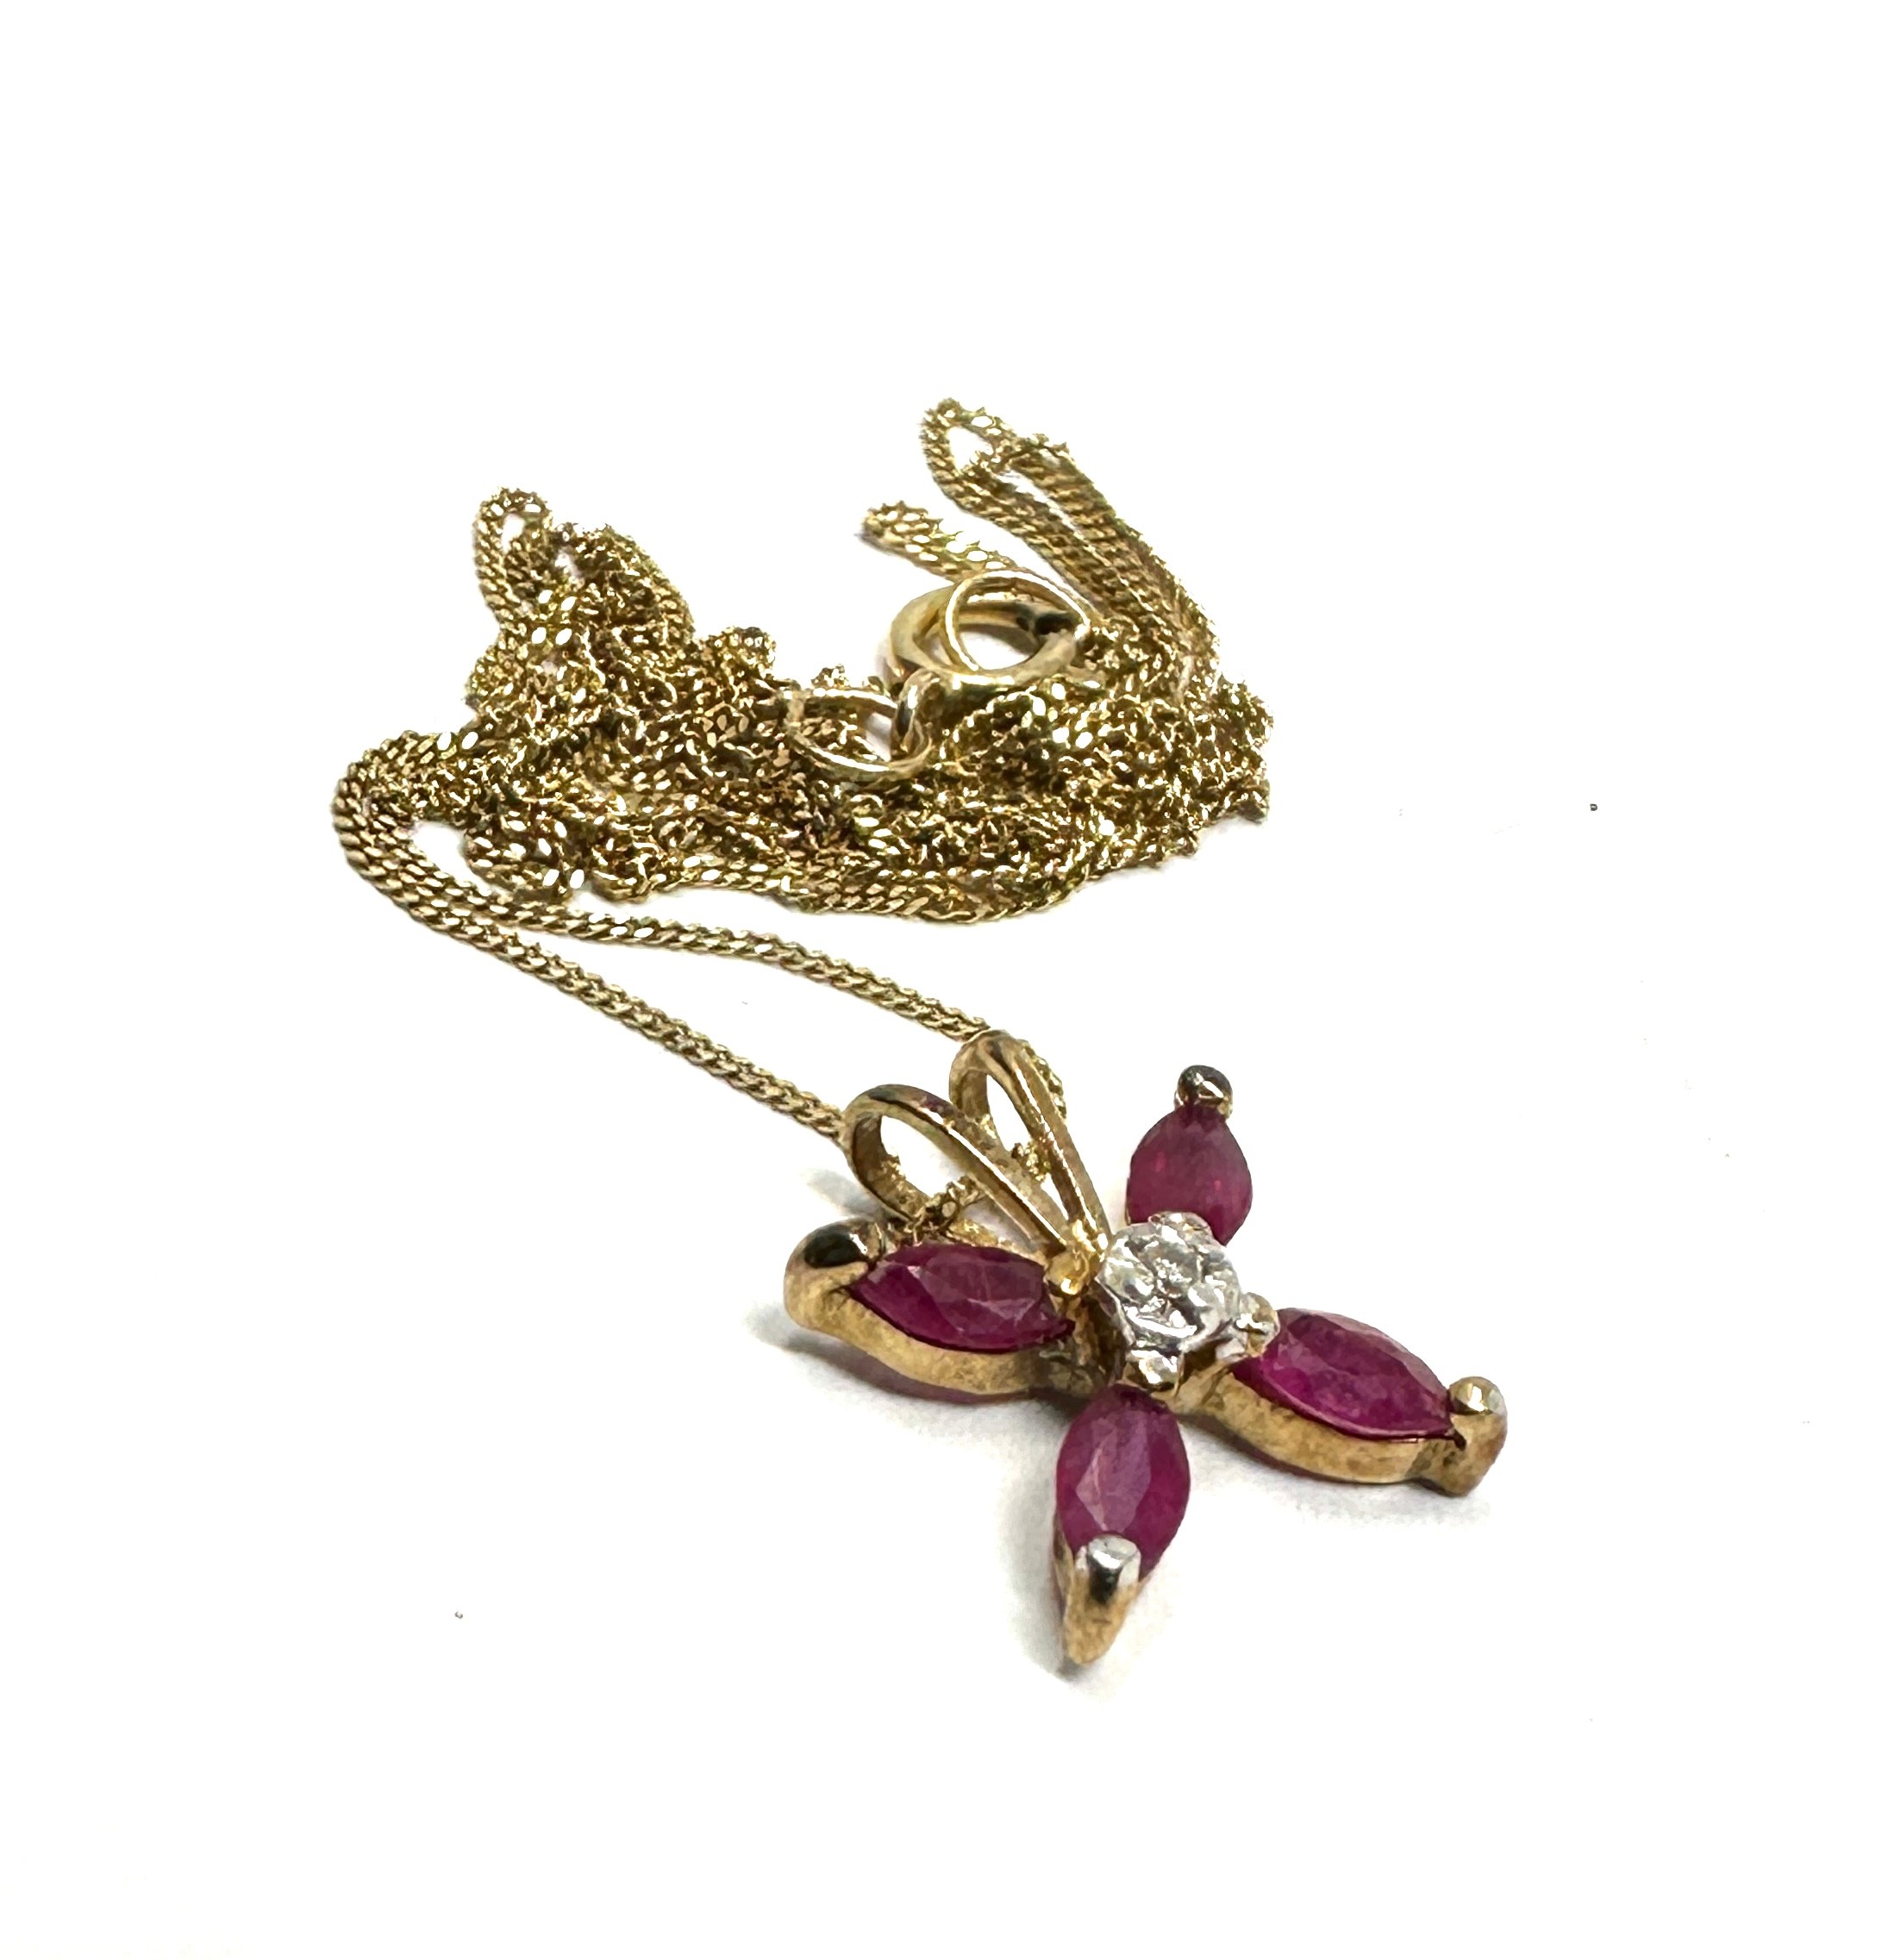 9ct gold diamond & ruby pendant necklace (0.9g)